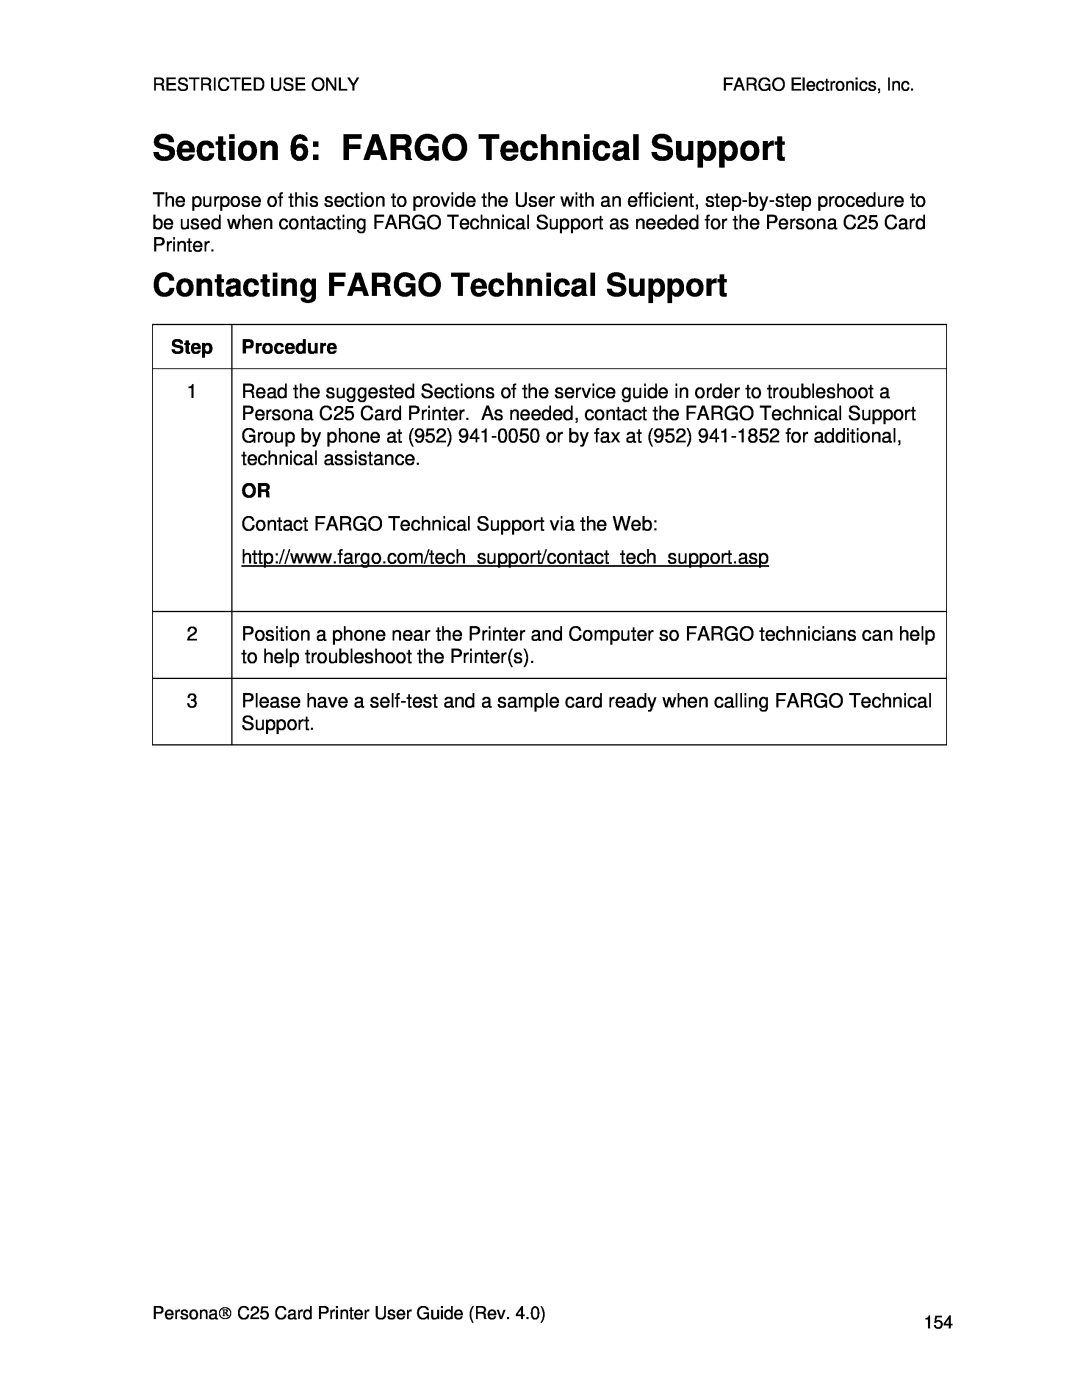 FARGO electronic S000256 manual Contacting FARGO Technical Support 